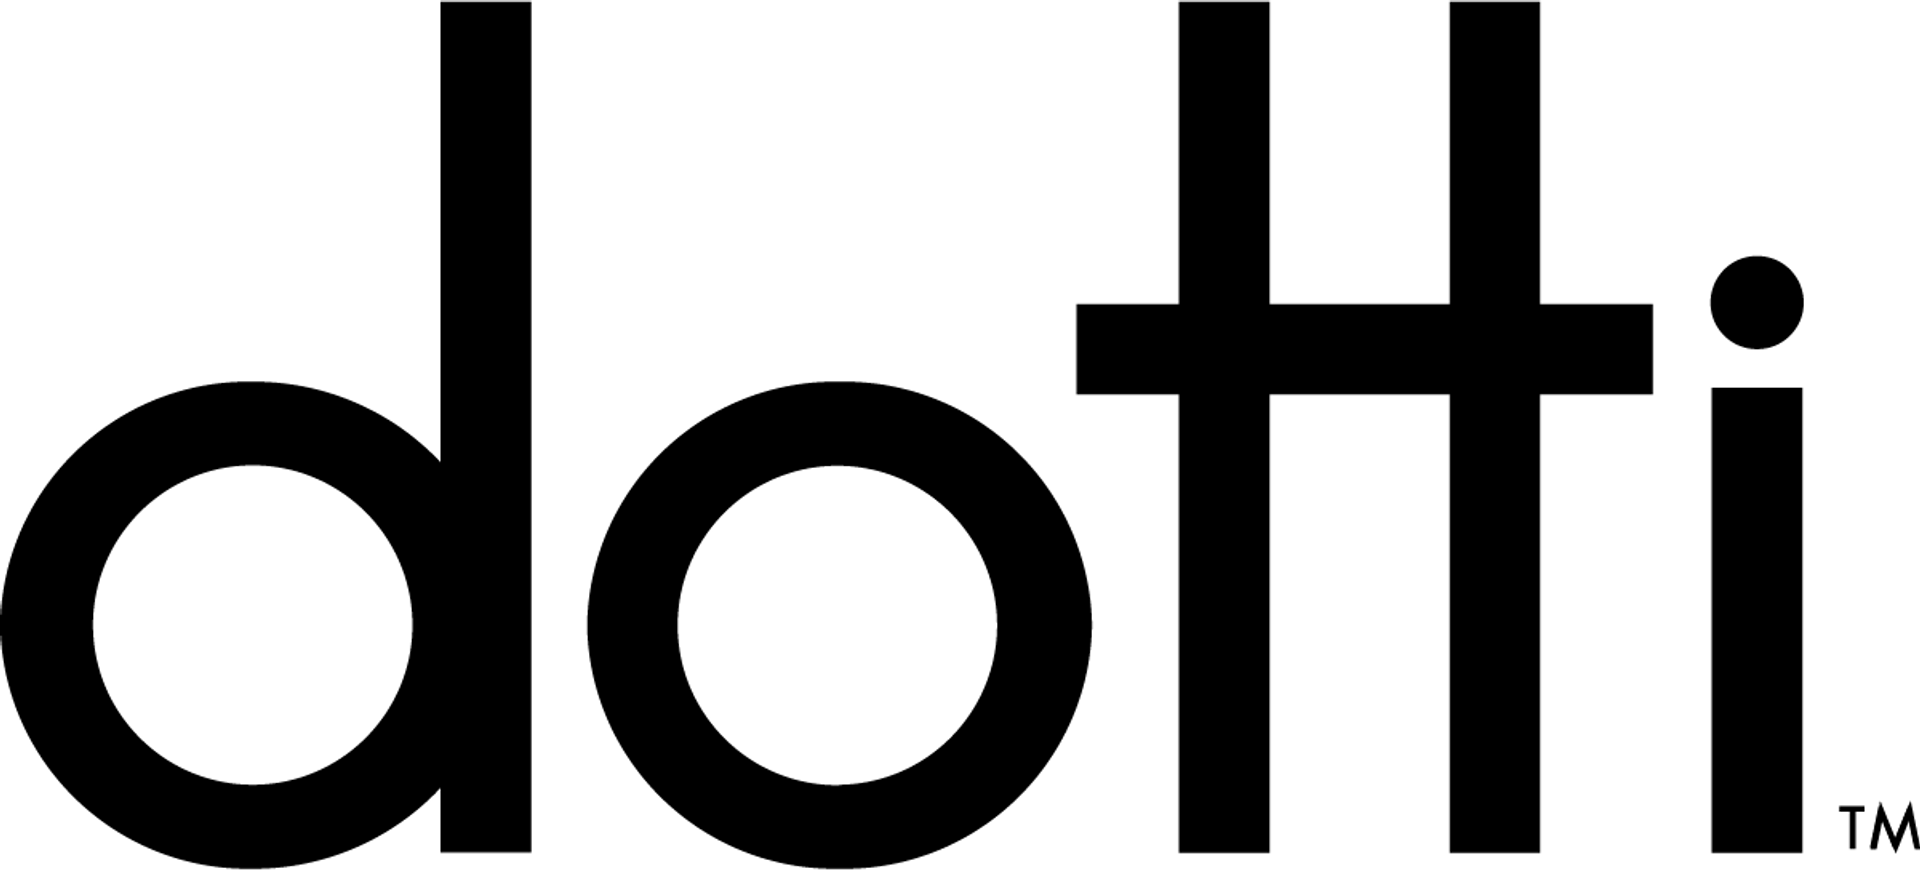 DOTTI logo of current catalogue